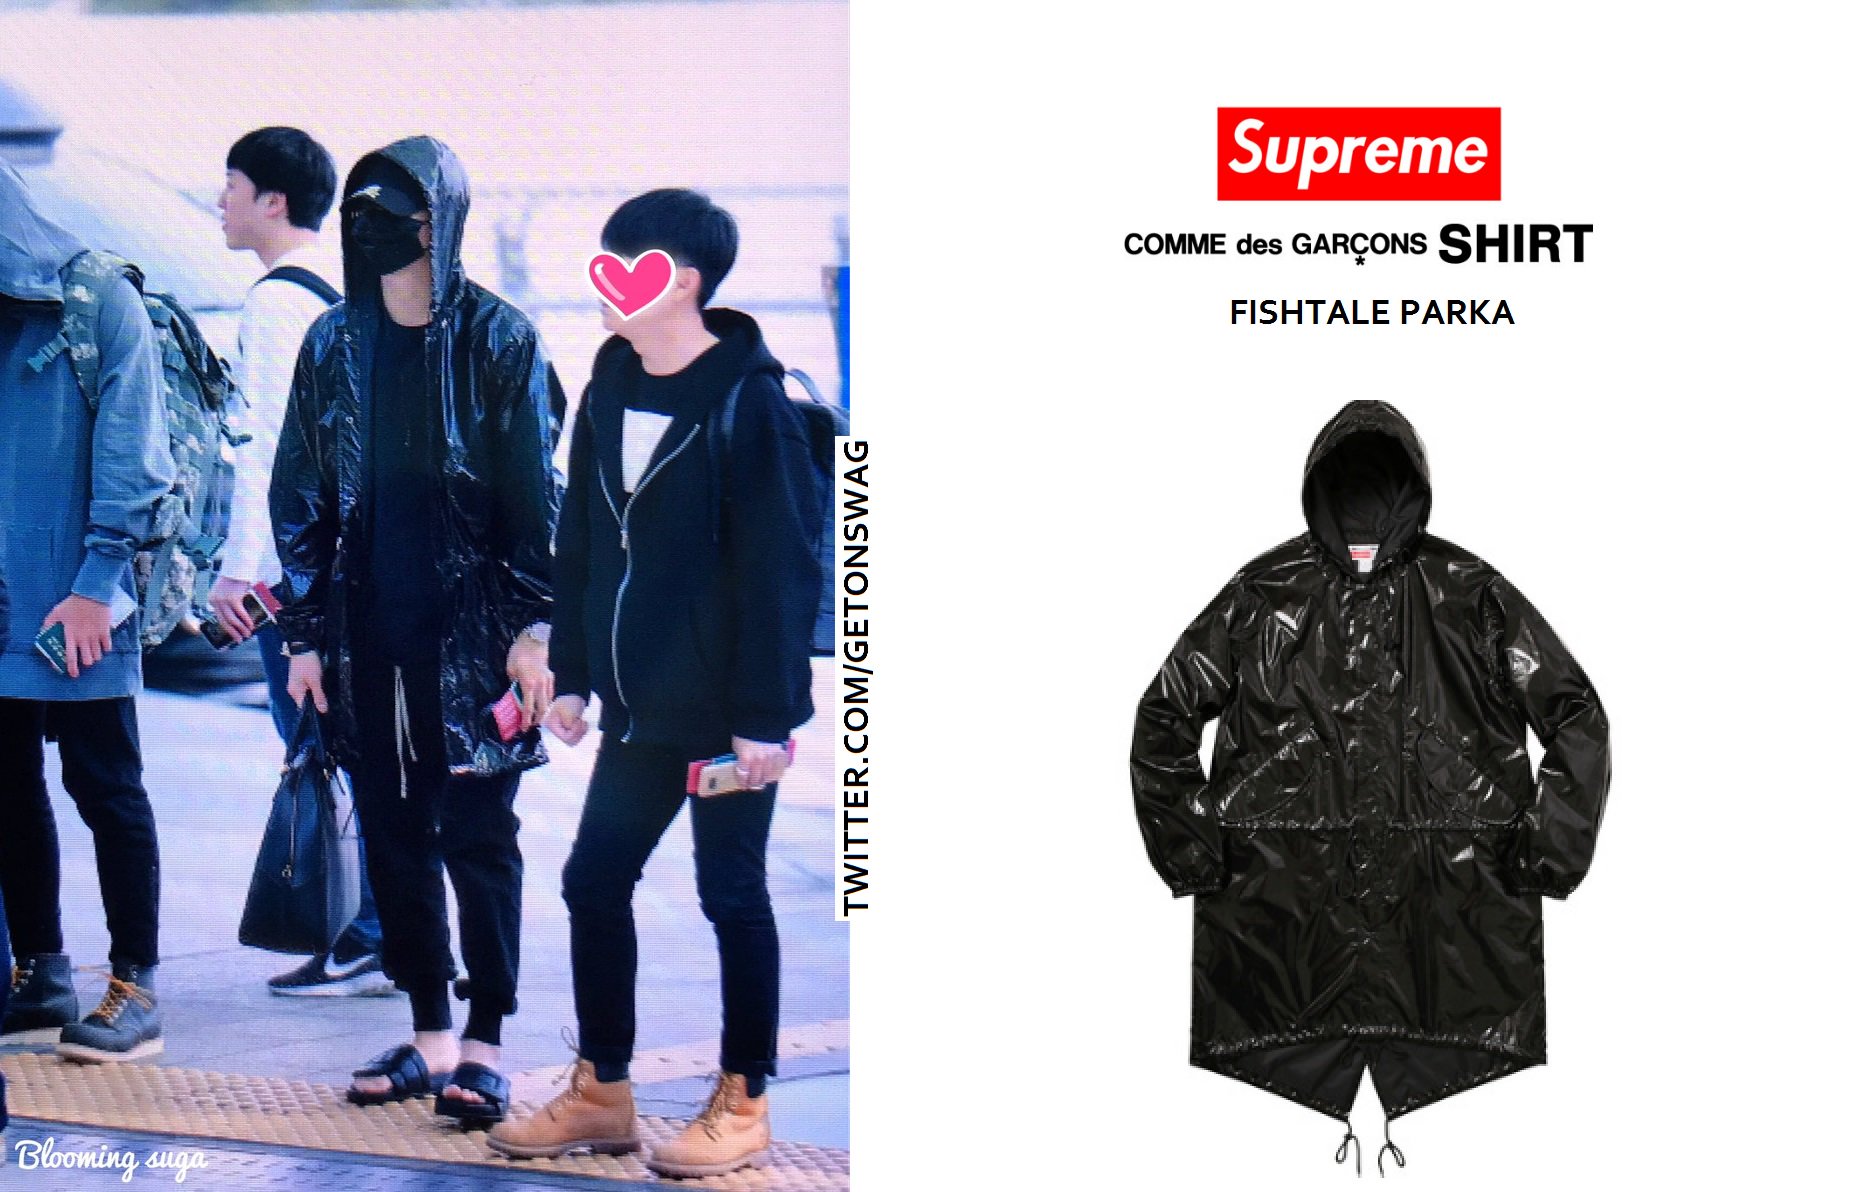 Beyond The Style ✼ Alex ✼ en X: SUGA #SUGA 170519 airport #BTS #방탄소년단 #민윤기  GIVENCHY Black Destroyed Cotton Denim Casual Jacket   / X